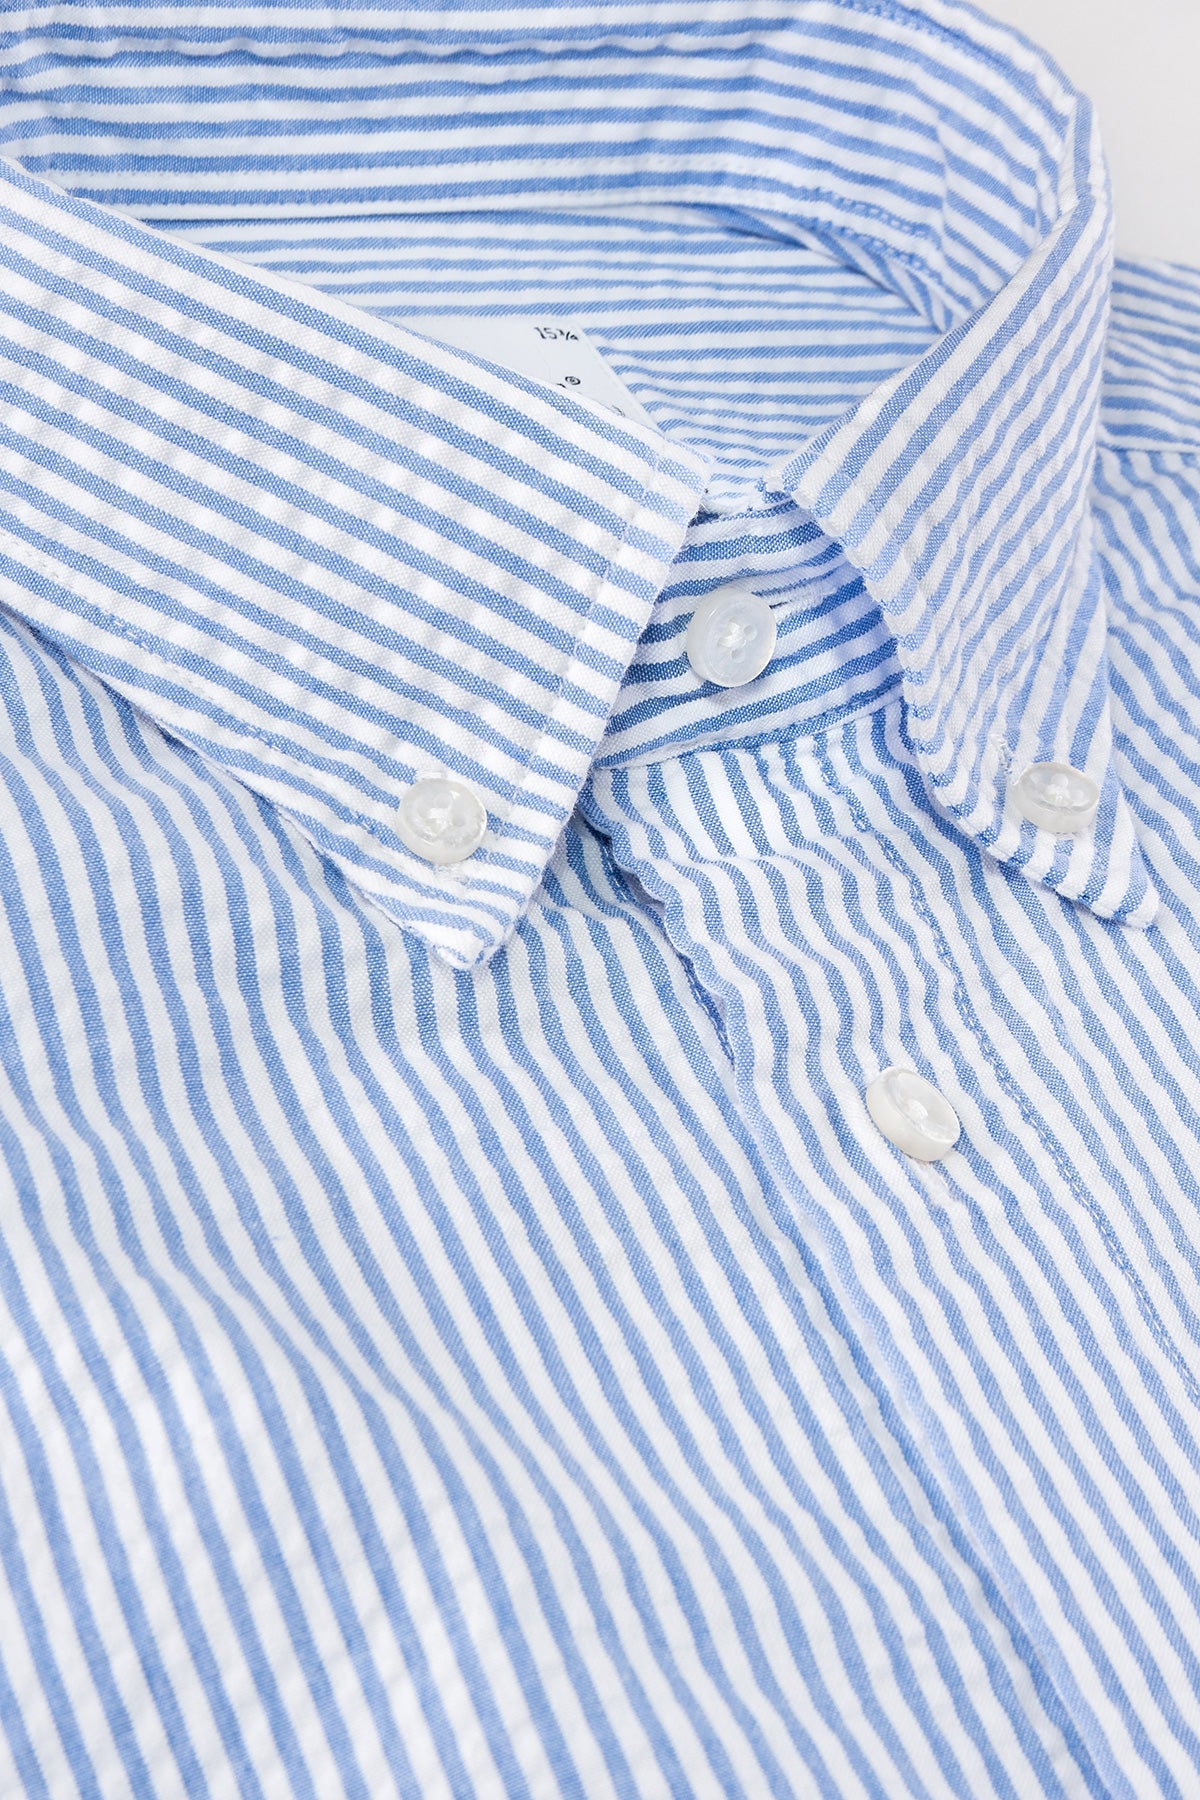 Light blue striped seersucker slim fit shirt